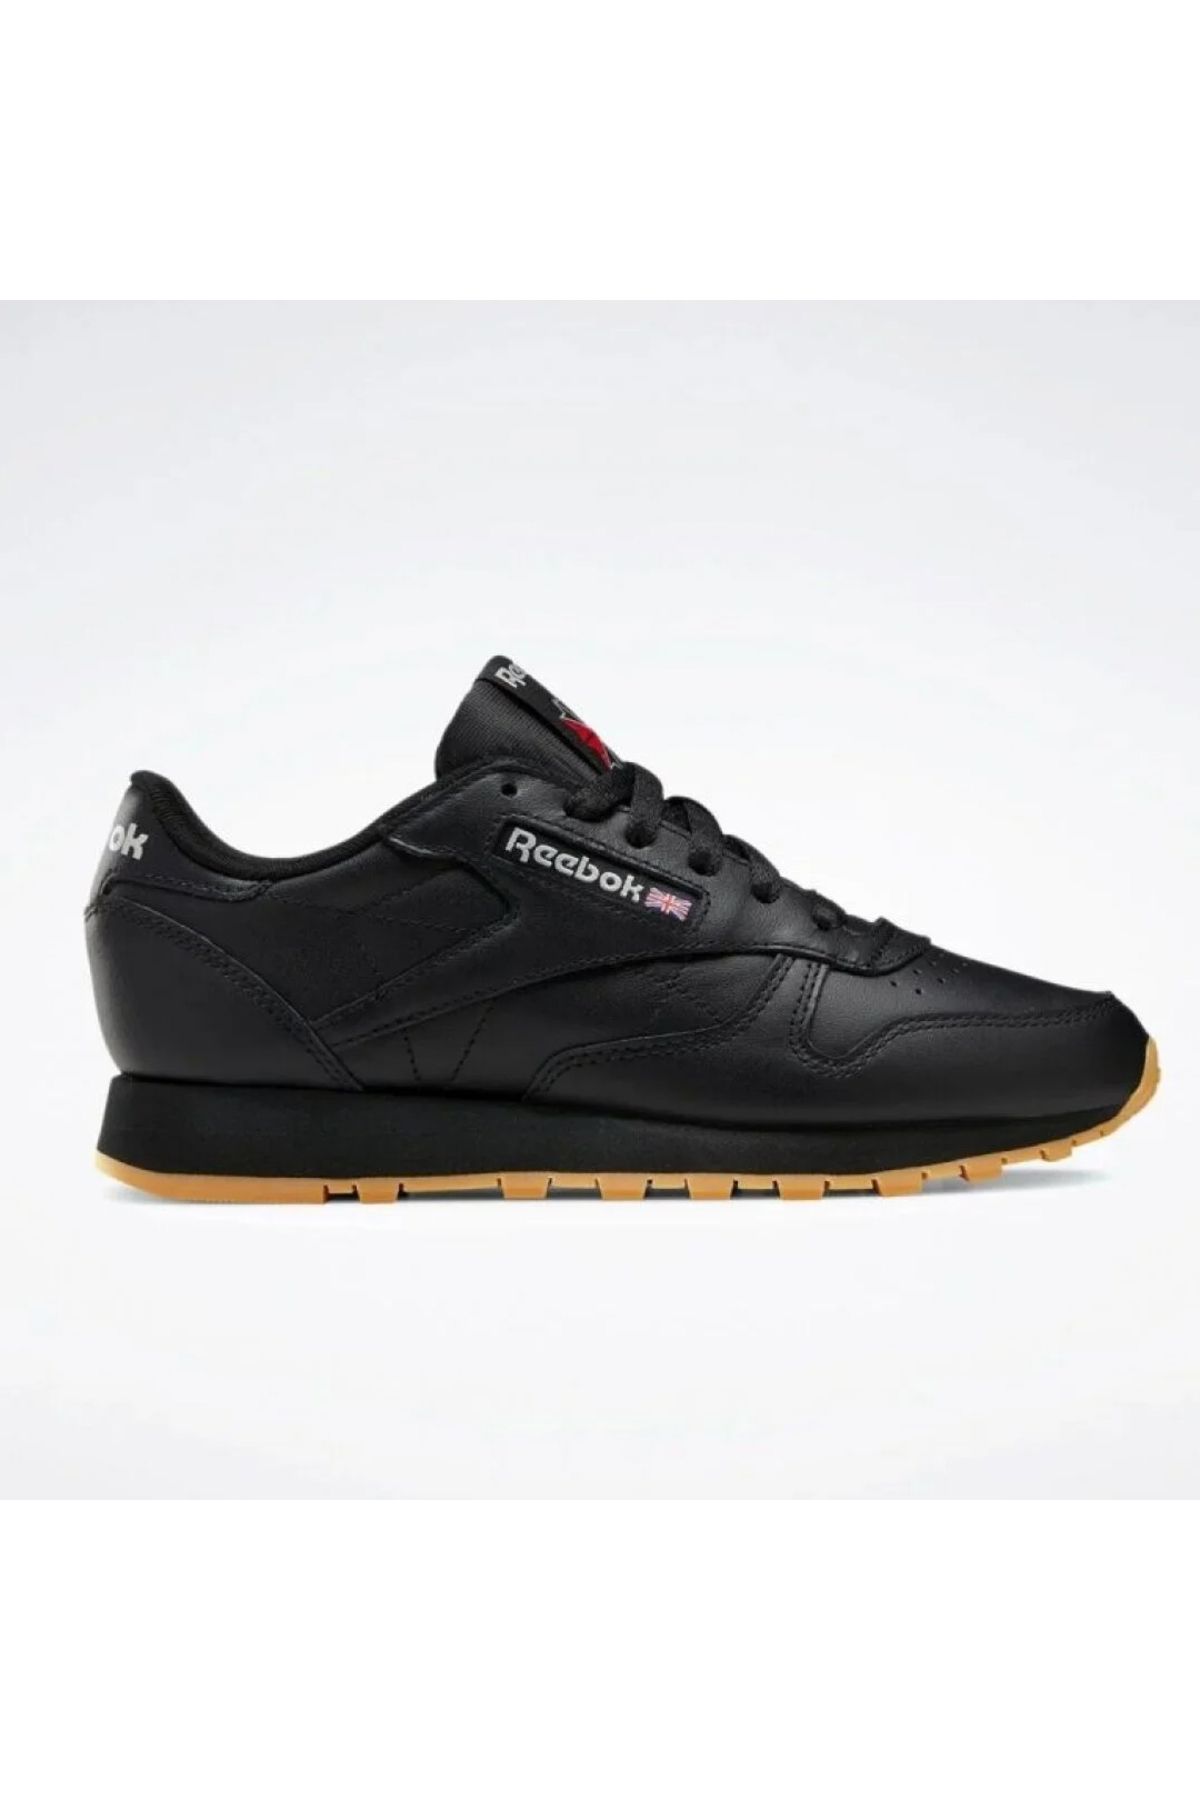 Reebok Classic Leather Unisex Siyah Sneaker